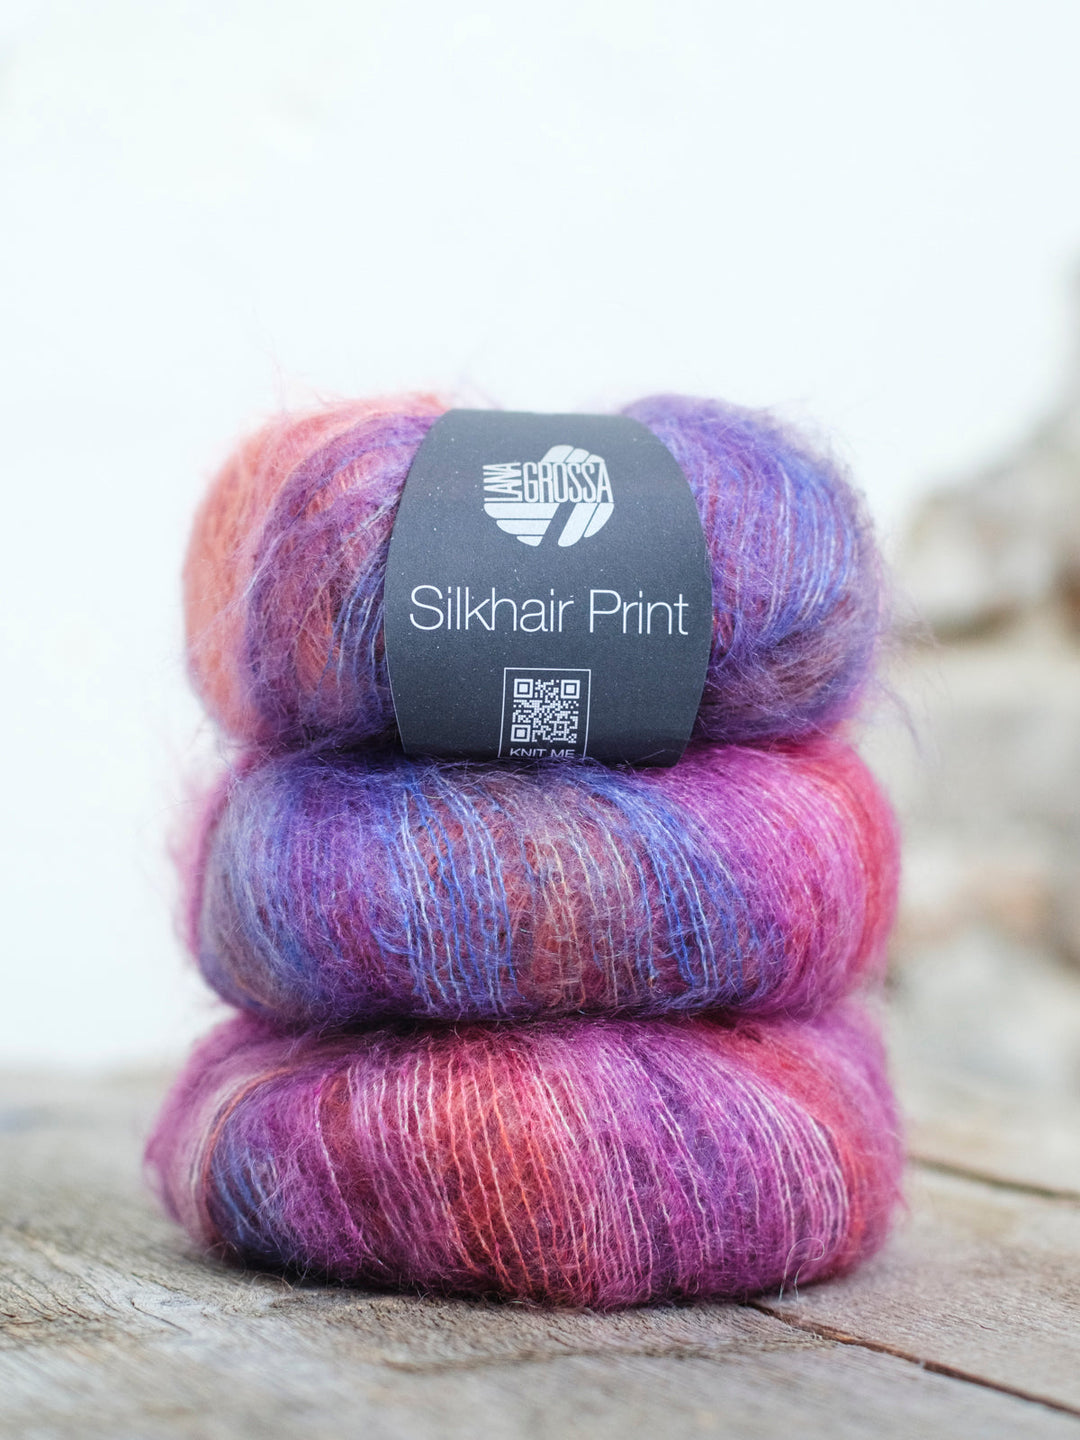 Silkhair Print 409 Lila / Rotviolett / Lachs / Fuchsia